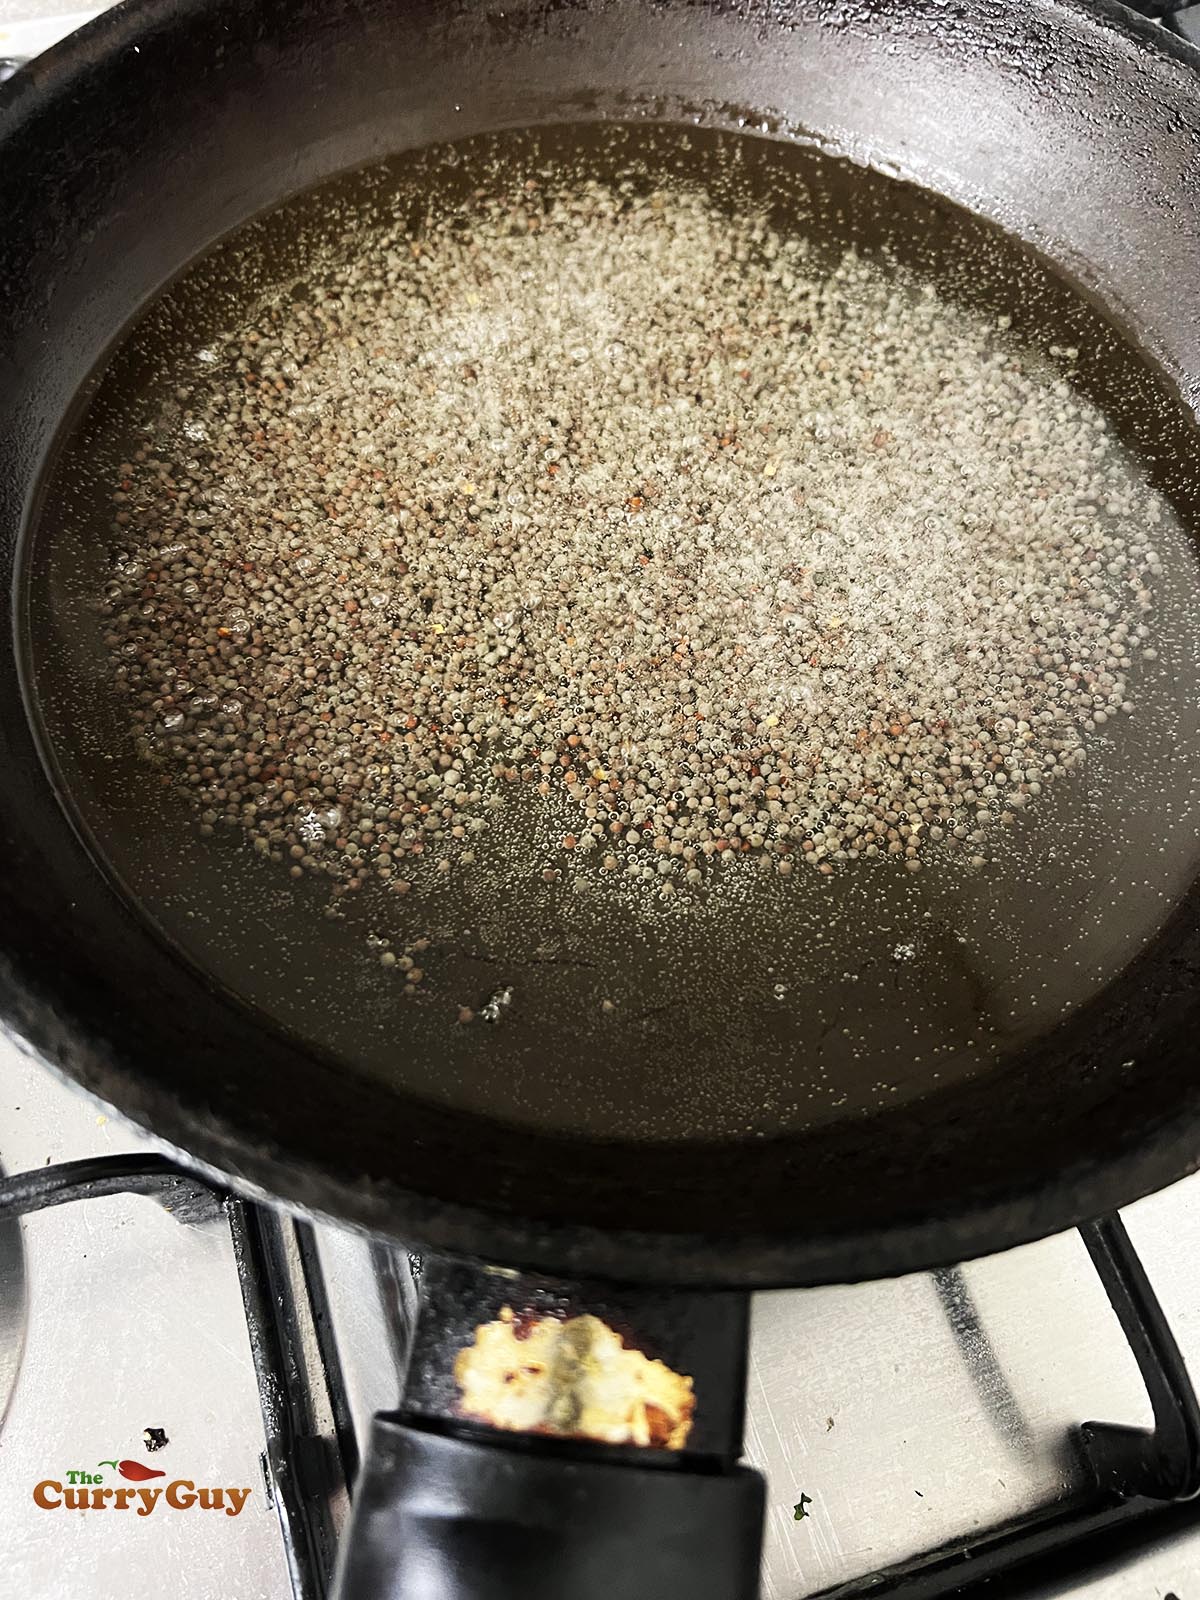 Frying mustard seeds.